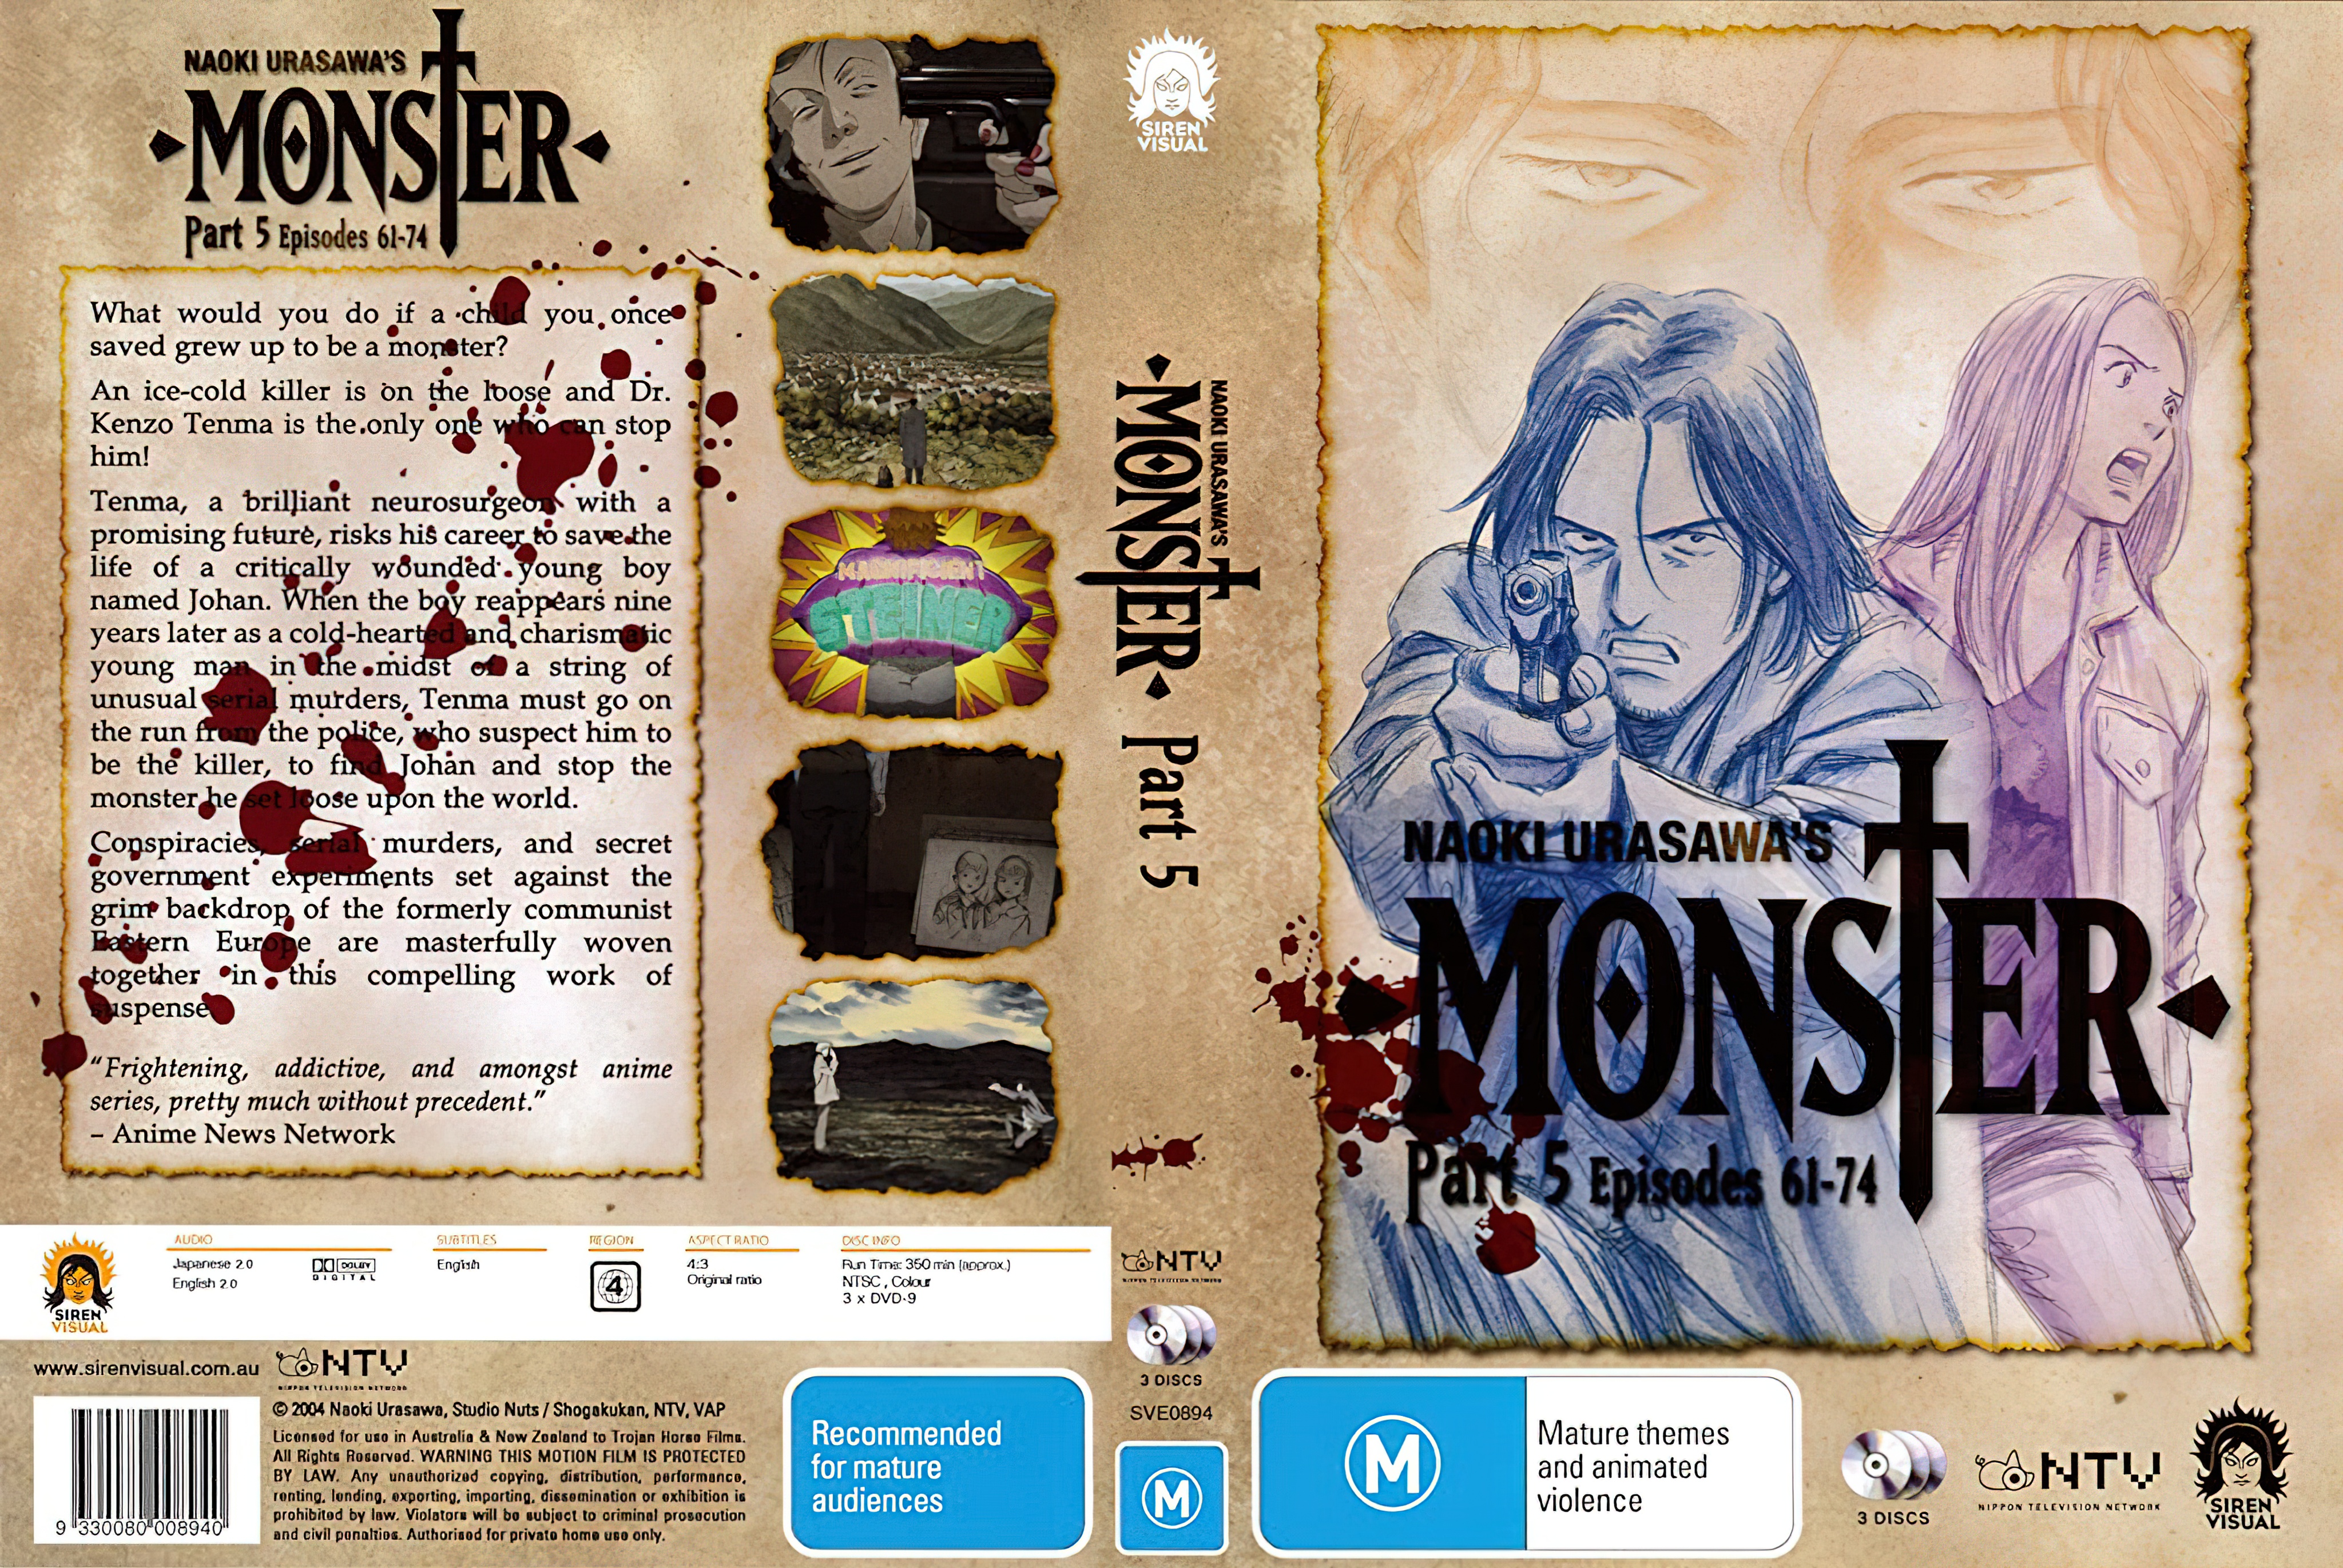 Monster Season 1 (2004) คนปีศาจ